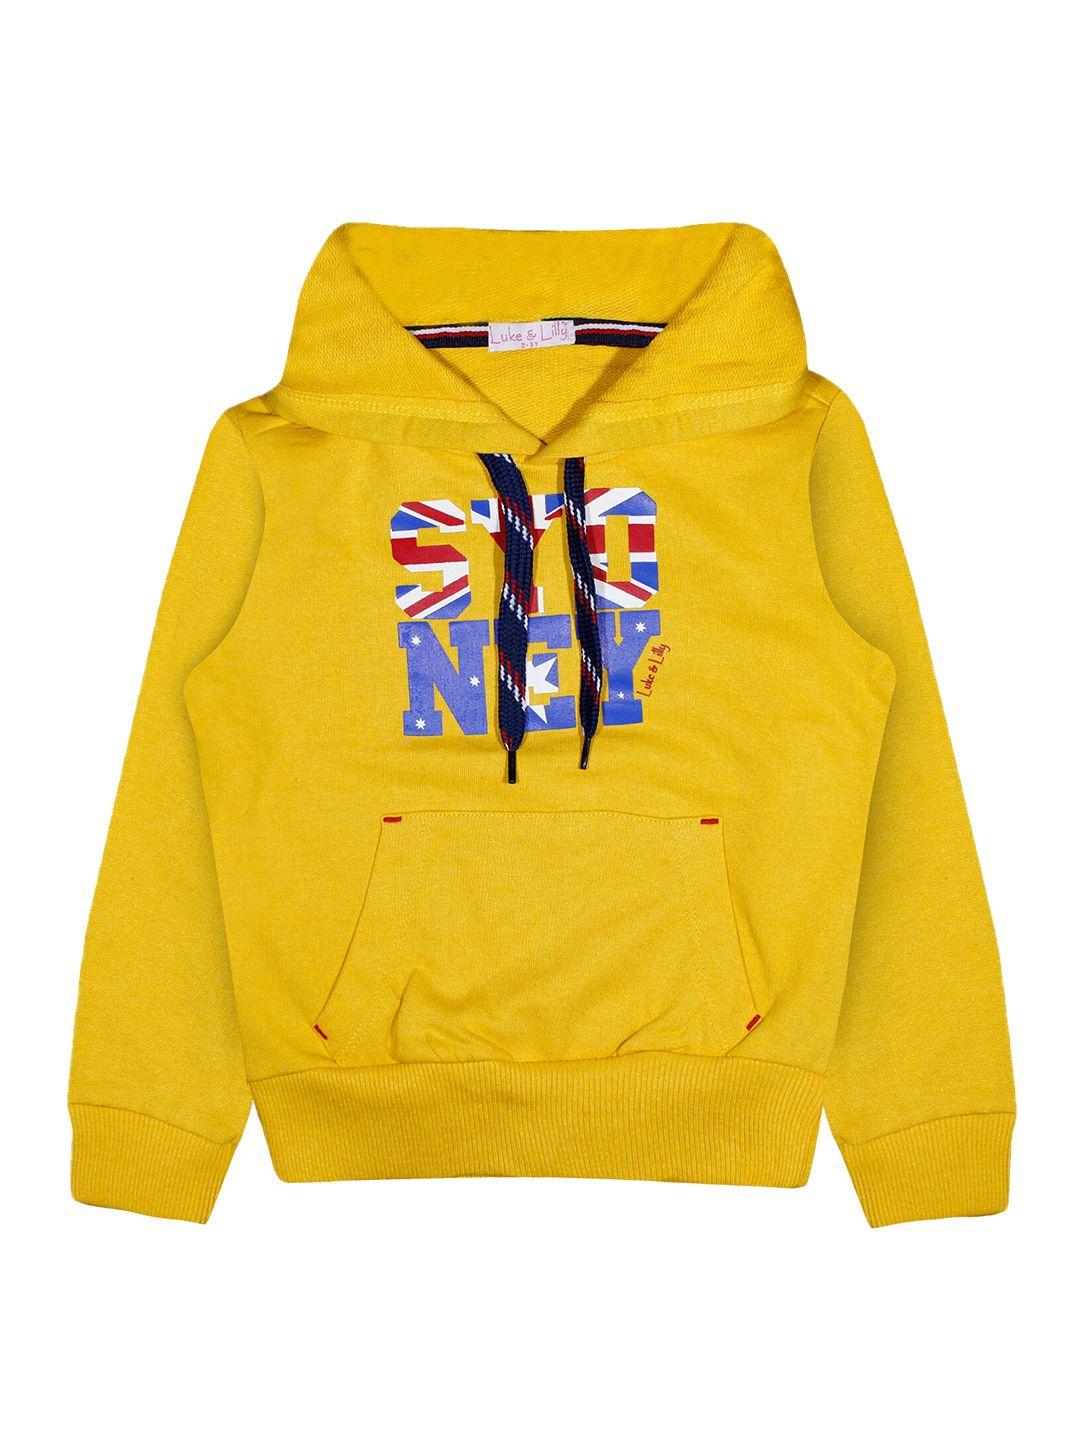 luke & lilly boys yellow printed hooded sweatshirt